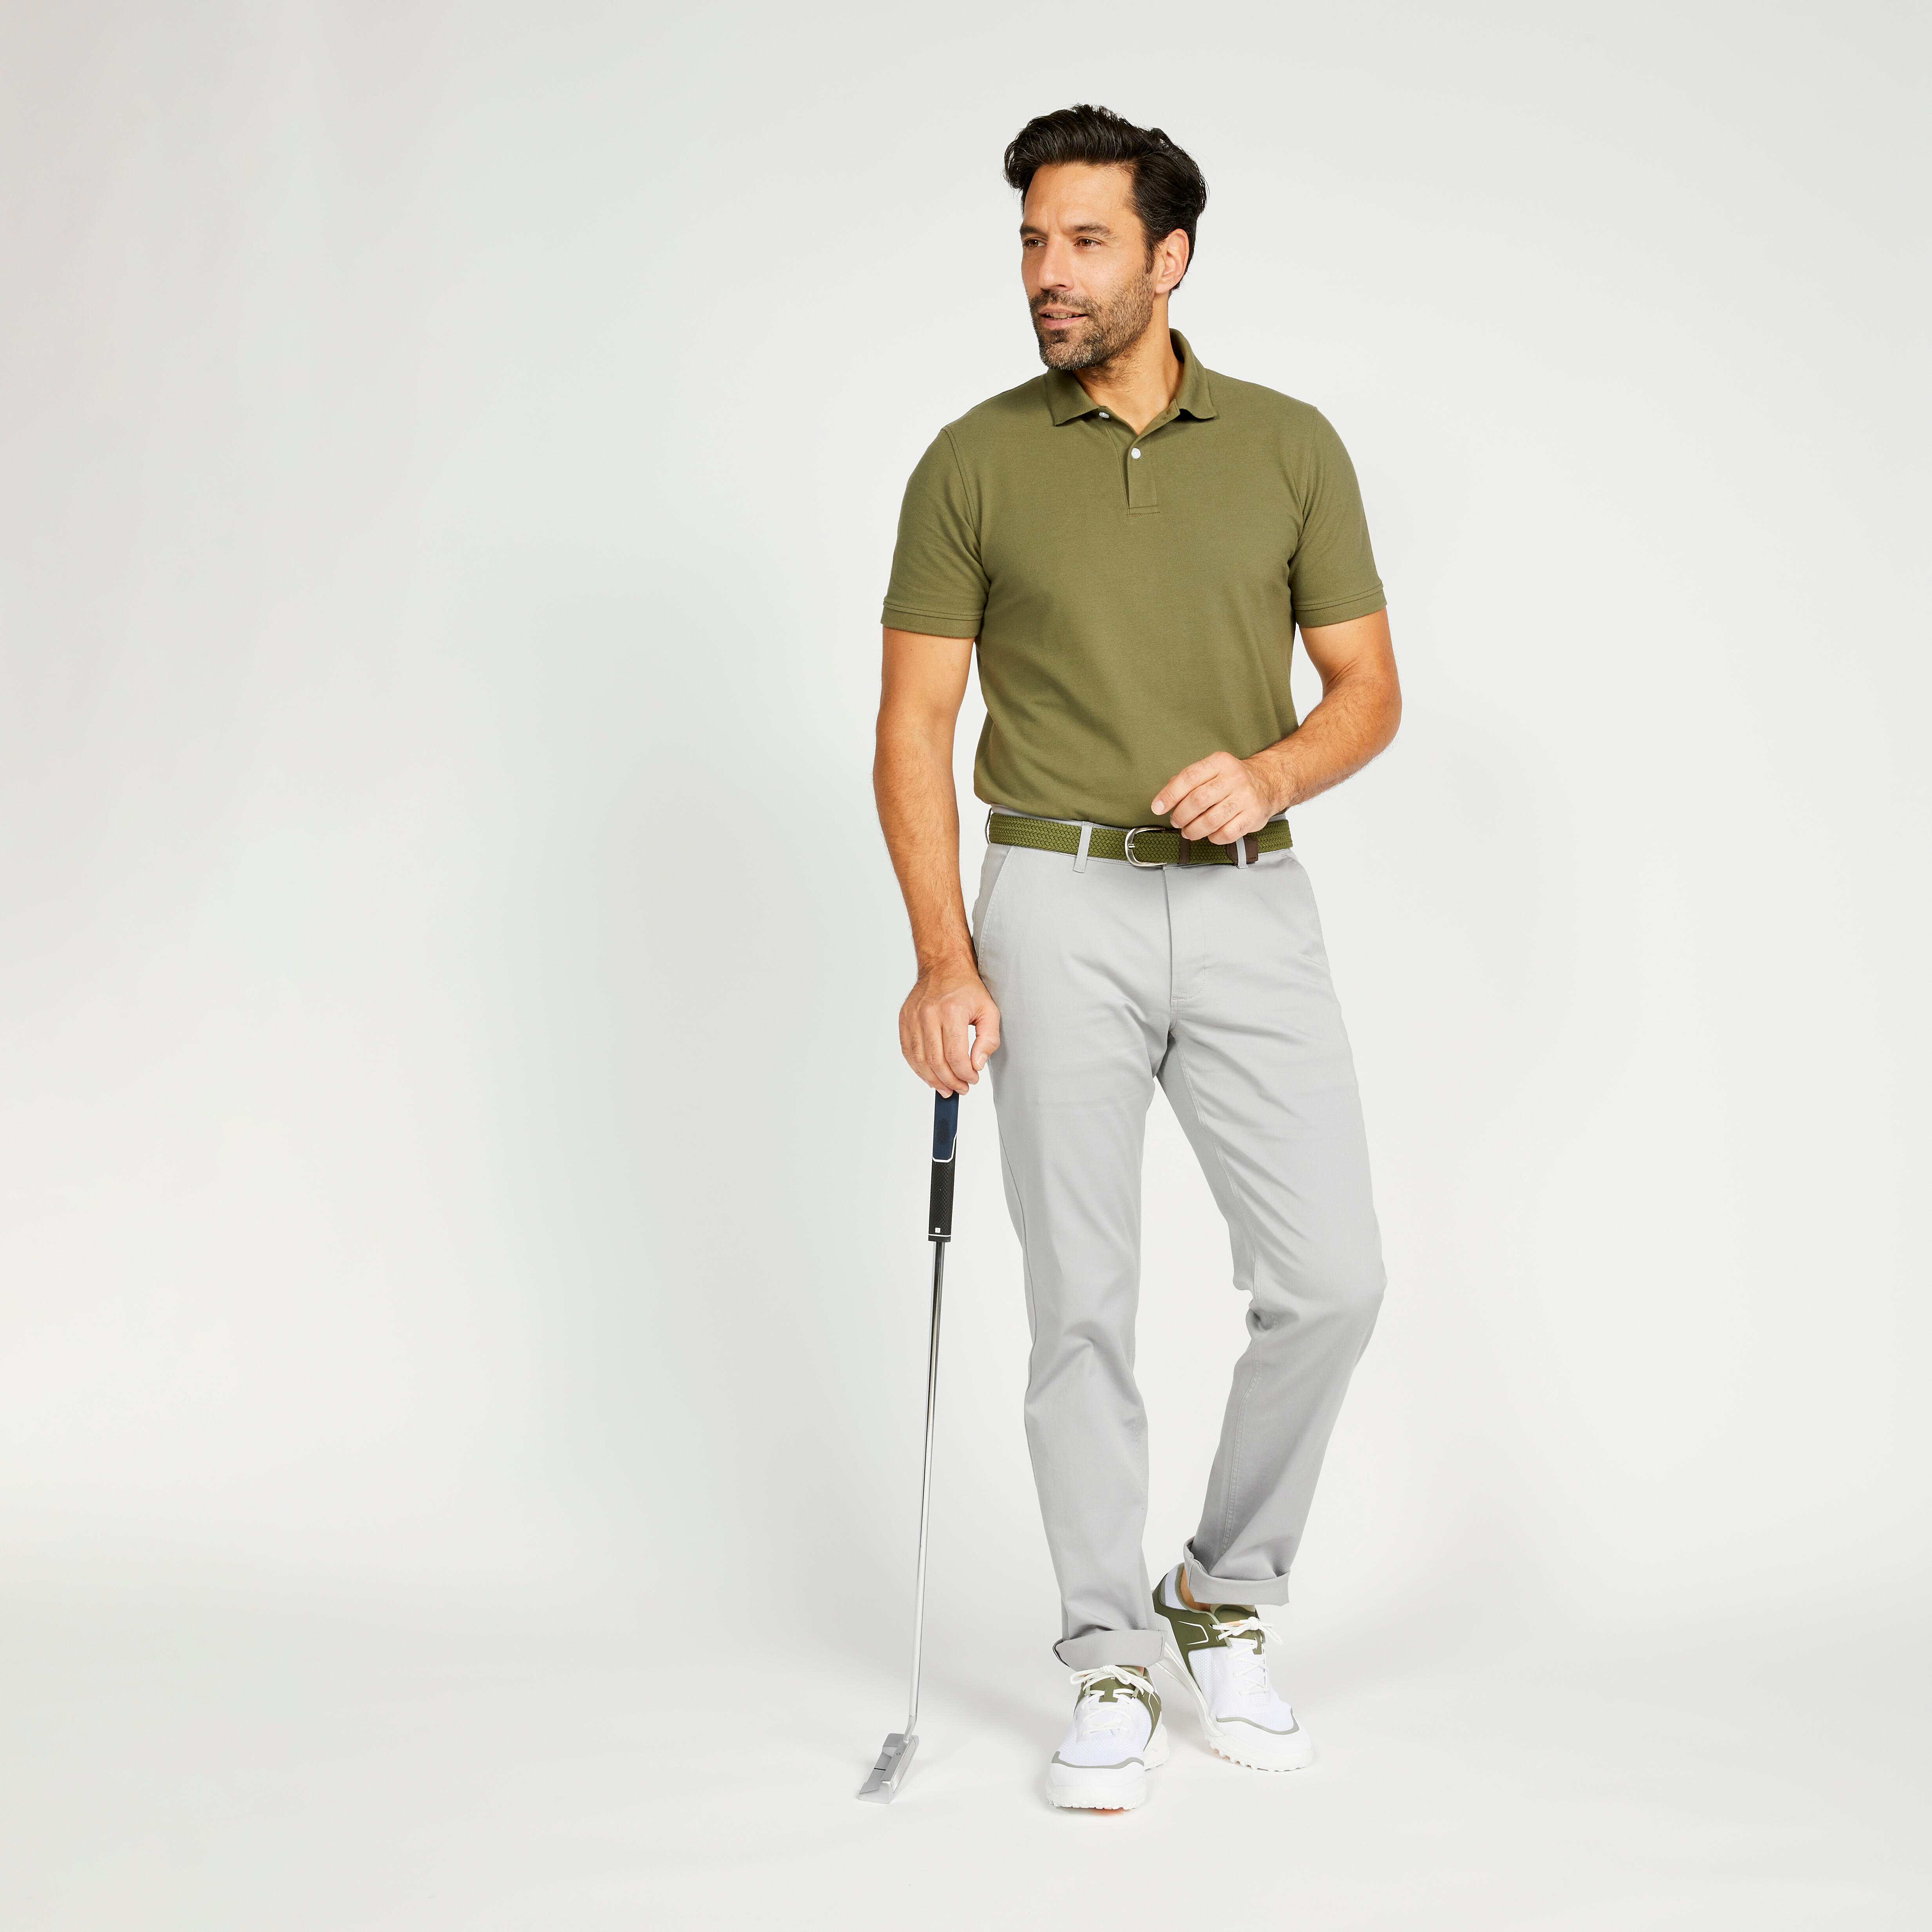 Men's Golf Pants - MW500 khaki